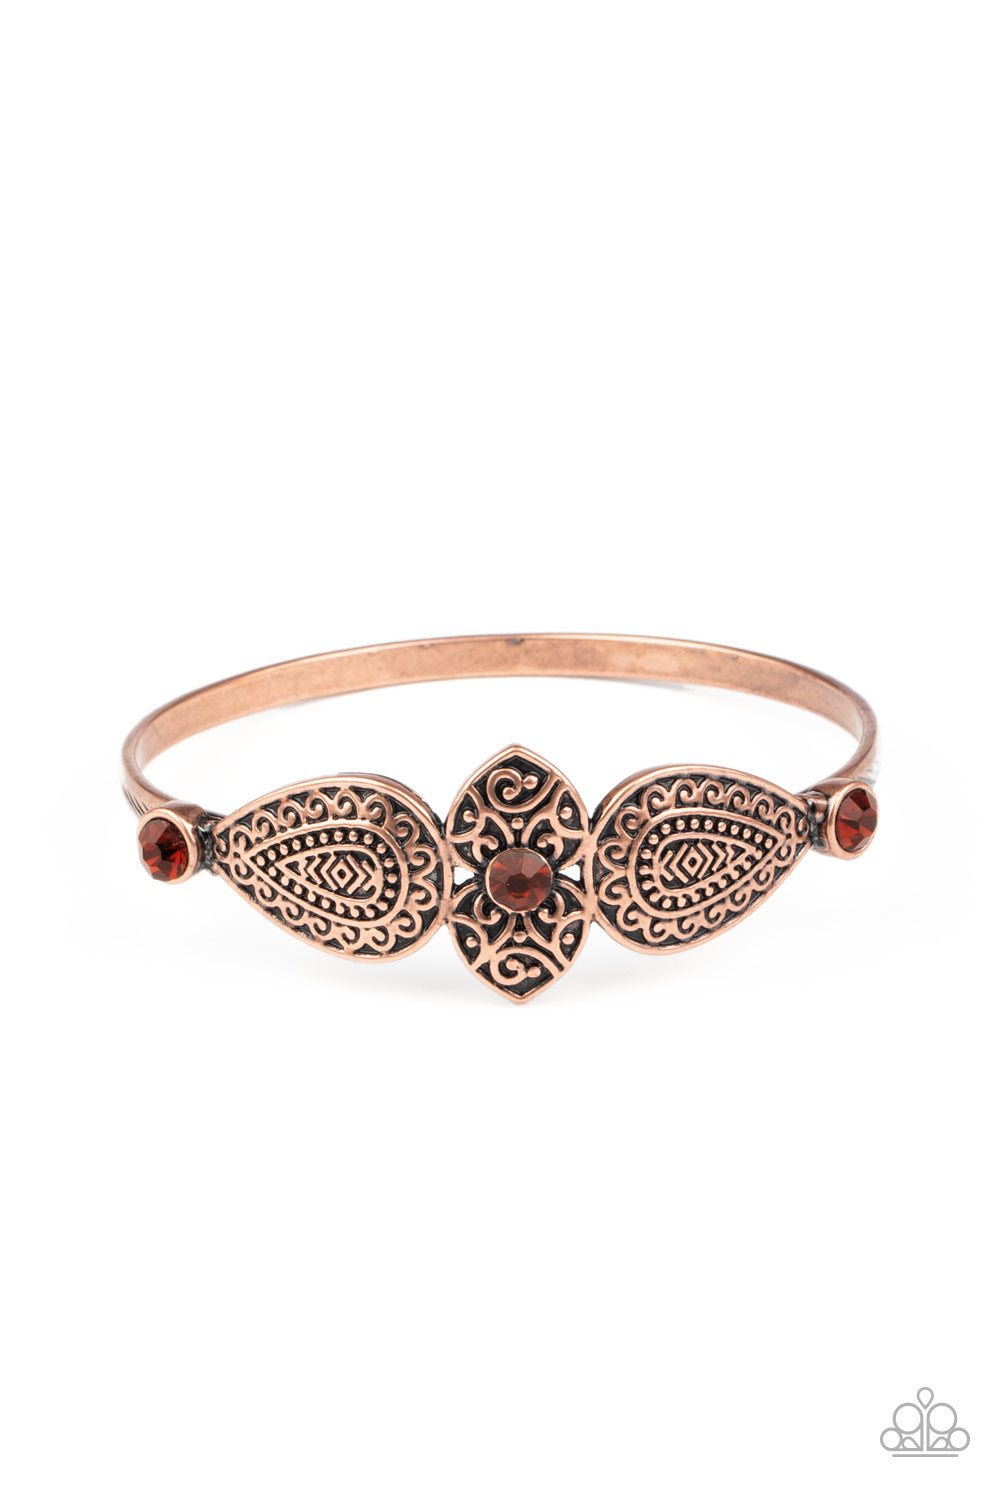 Flourishing Fashion - Copper Bracelet